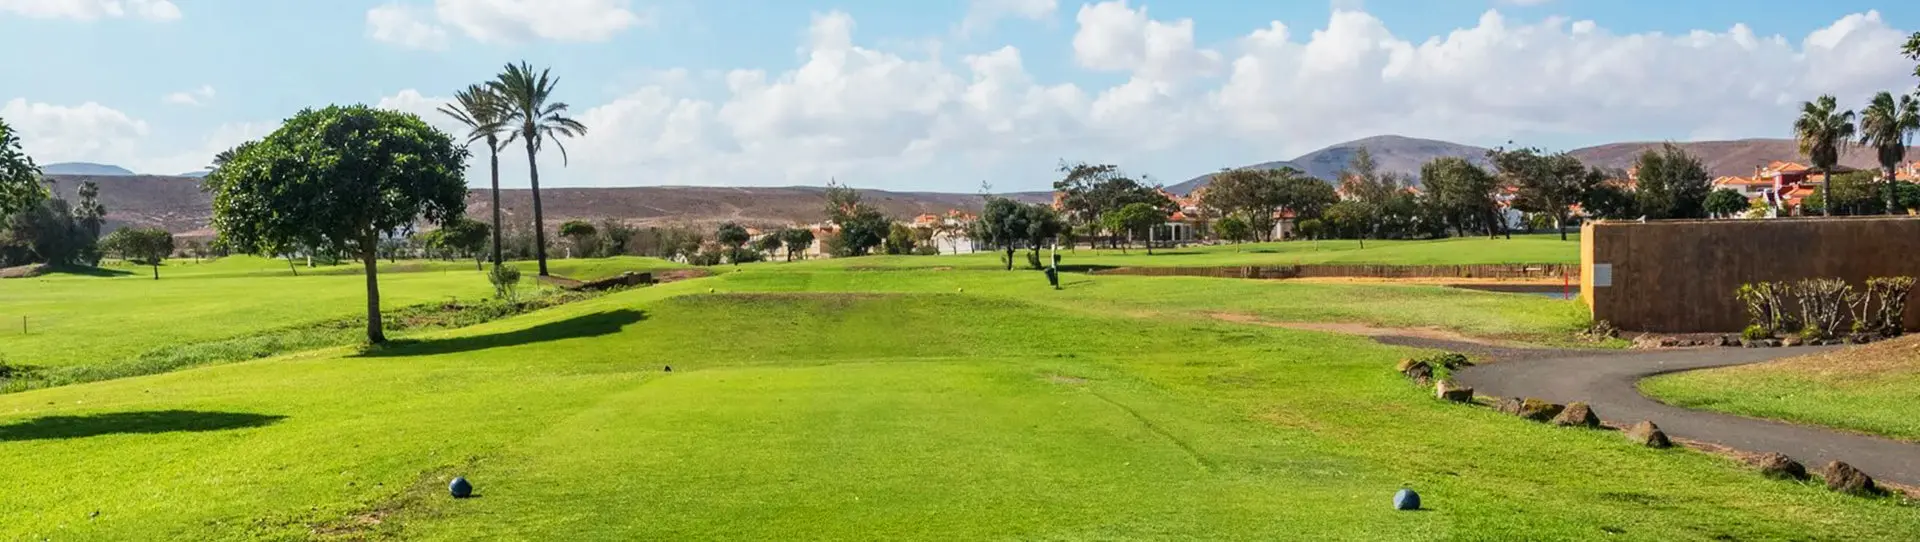 Spain golf courses - Fuerteventura Golf Course - Photo 2